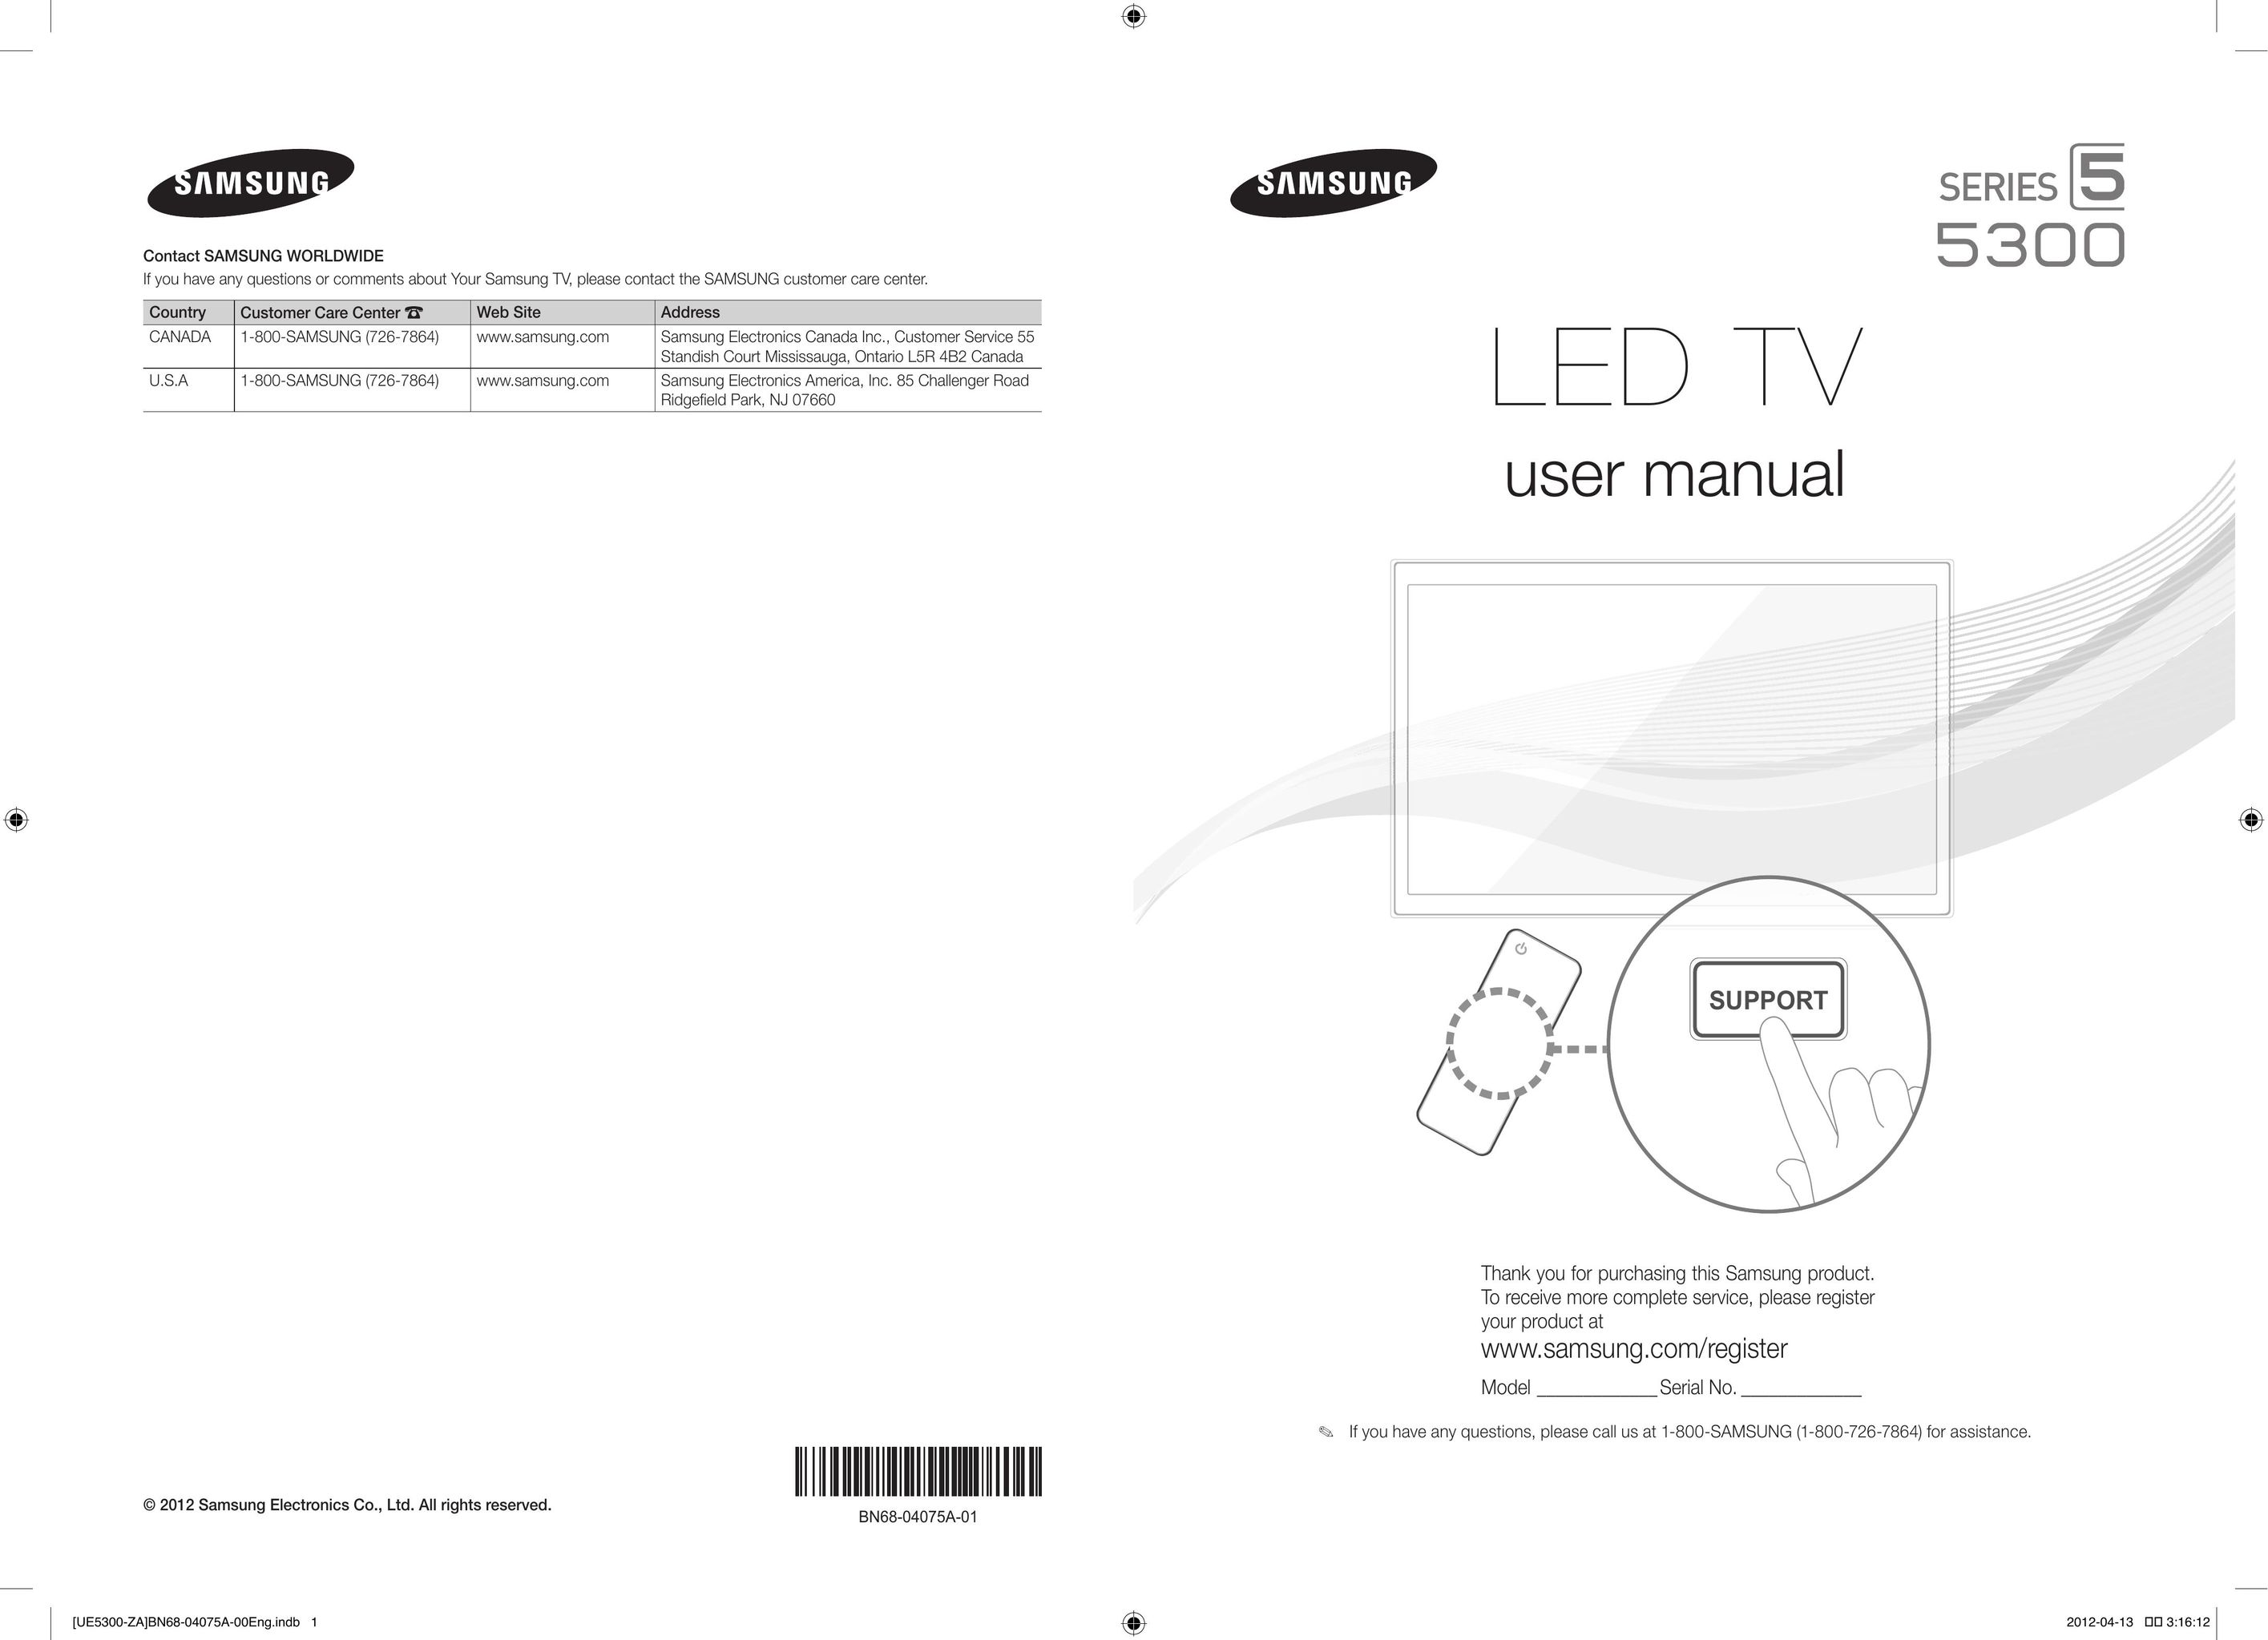 Samsung series 3500 led tv Model Vehicle User Manual